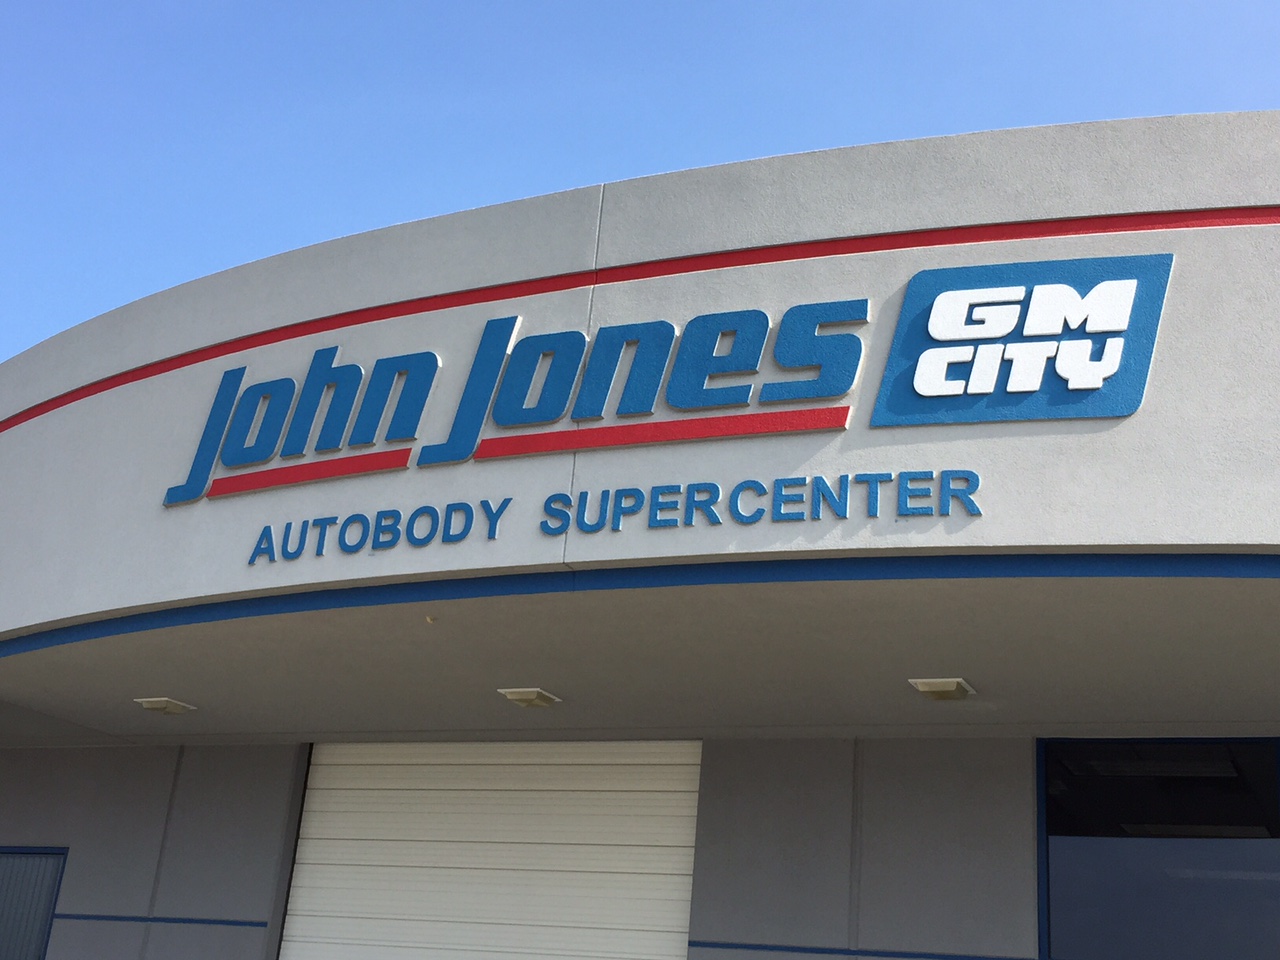 John Jones Collision Center